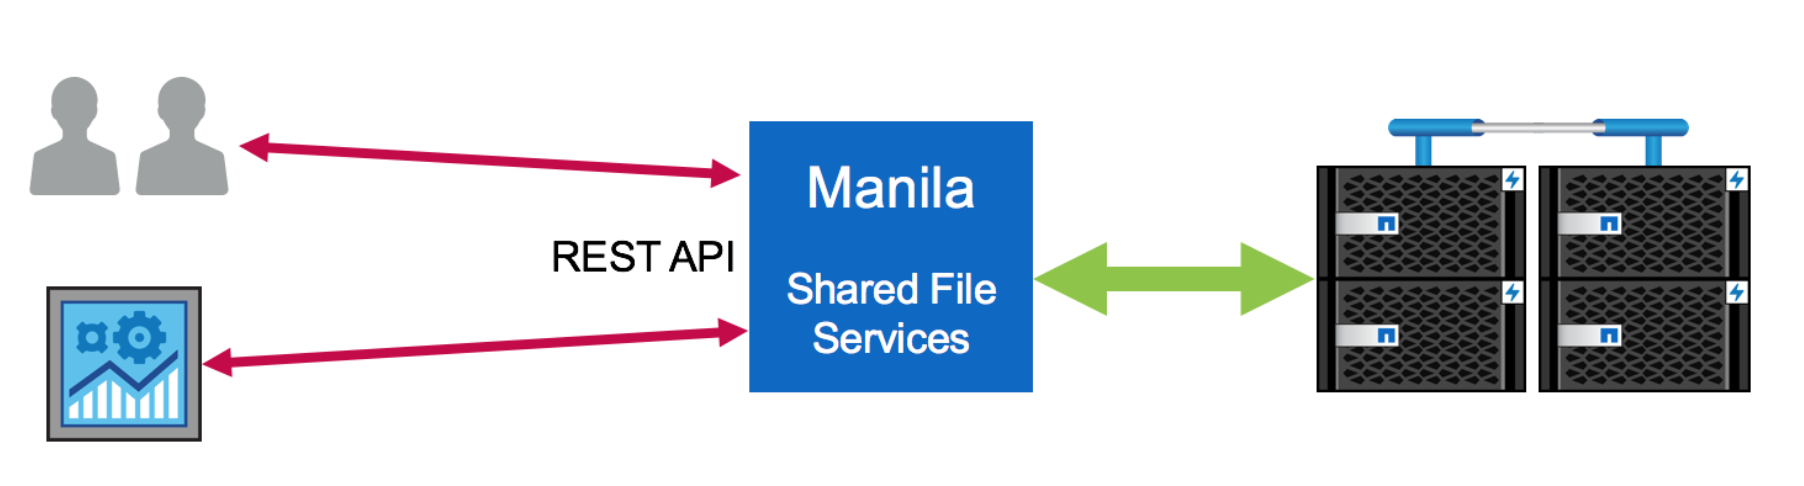 Manila REST API Diagram